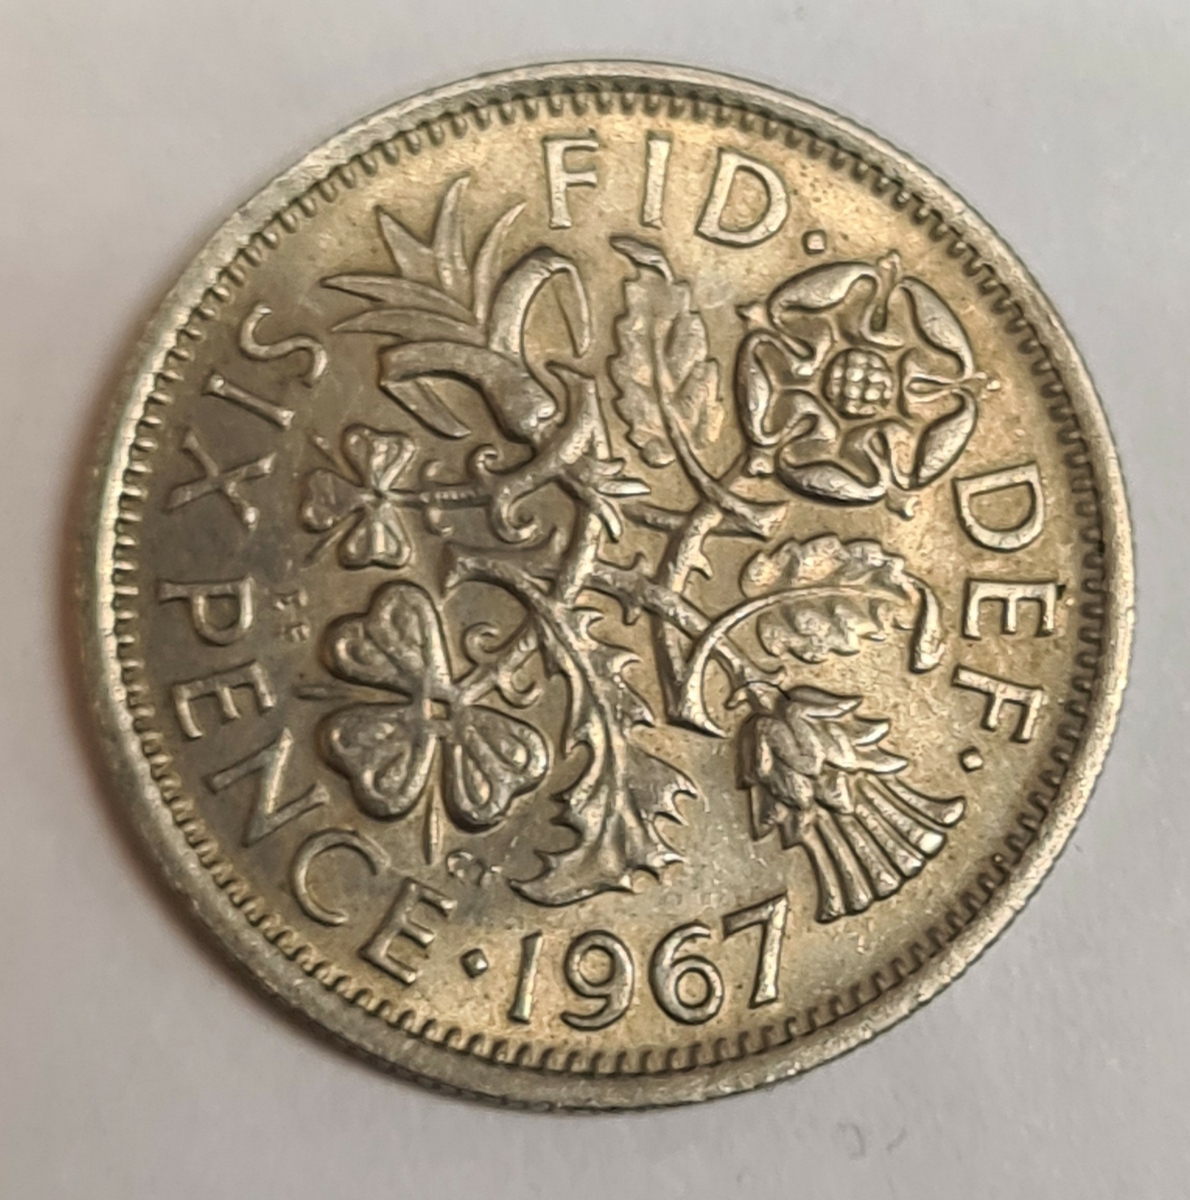 5 mynt från Storbritanien.
6 Pence 1967
6 Pence 1967
6 Pence 1962
6 Pence 1955
6 Pence 1961